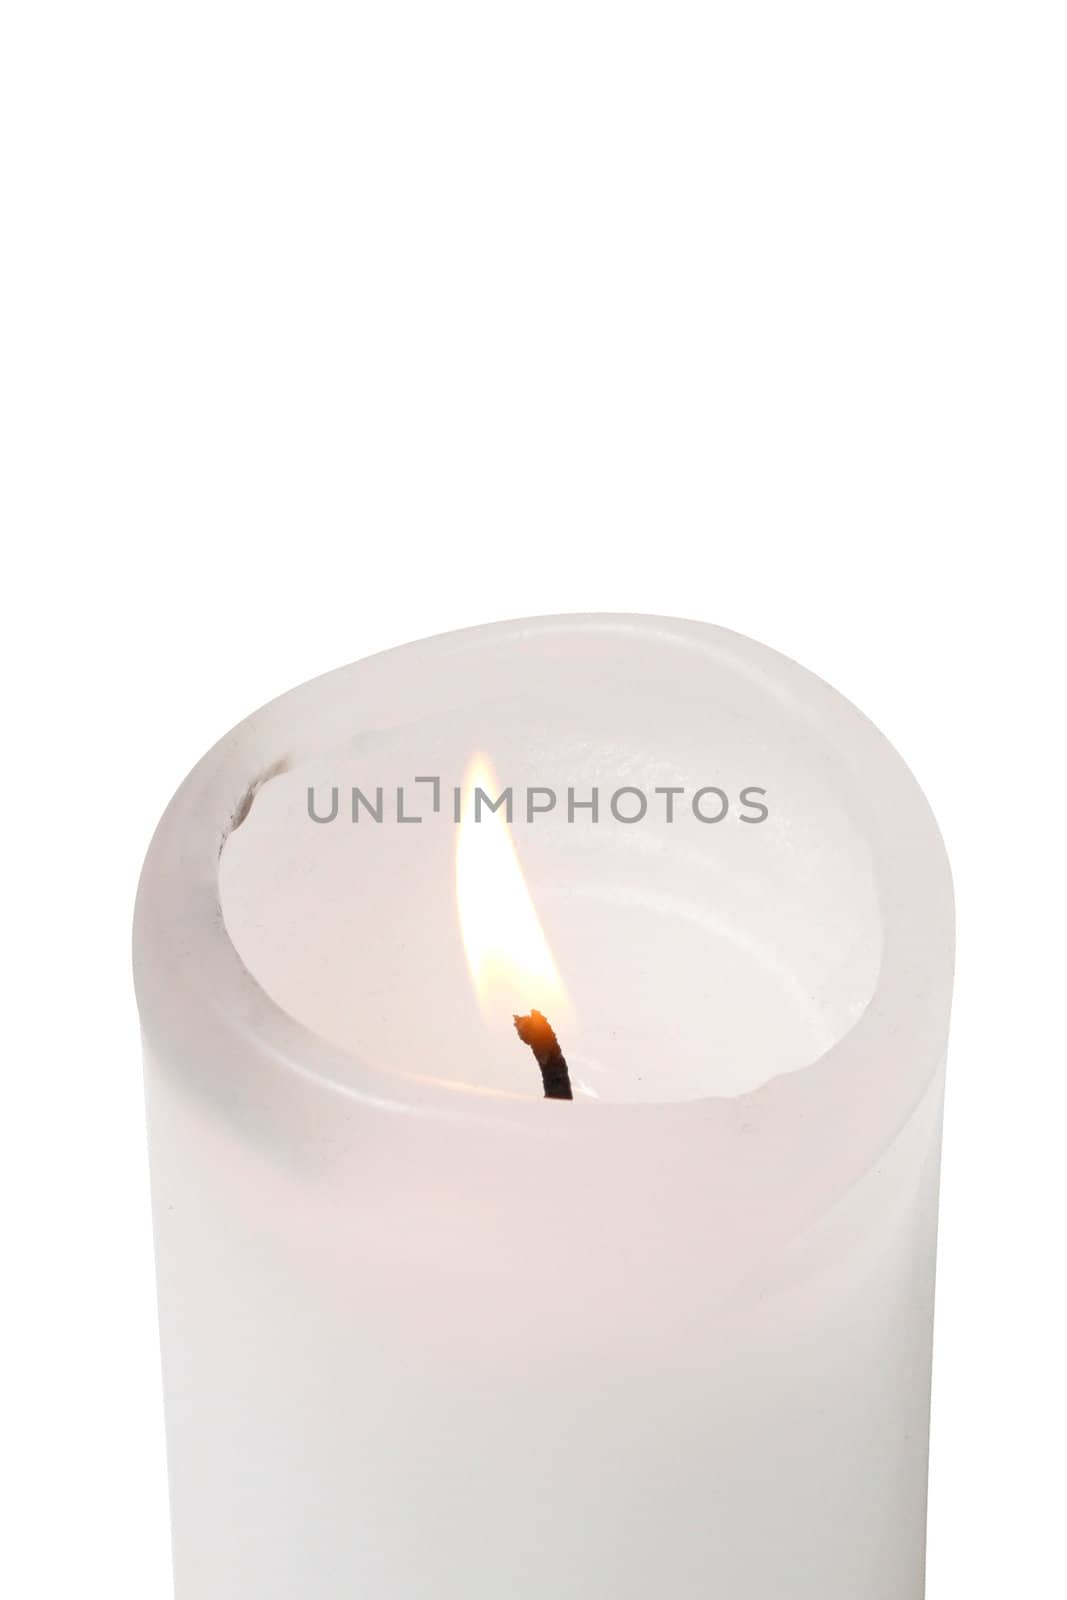 A burning candle isolated on white